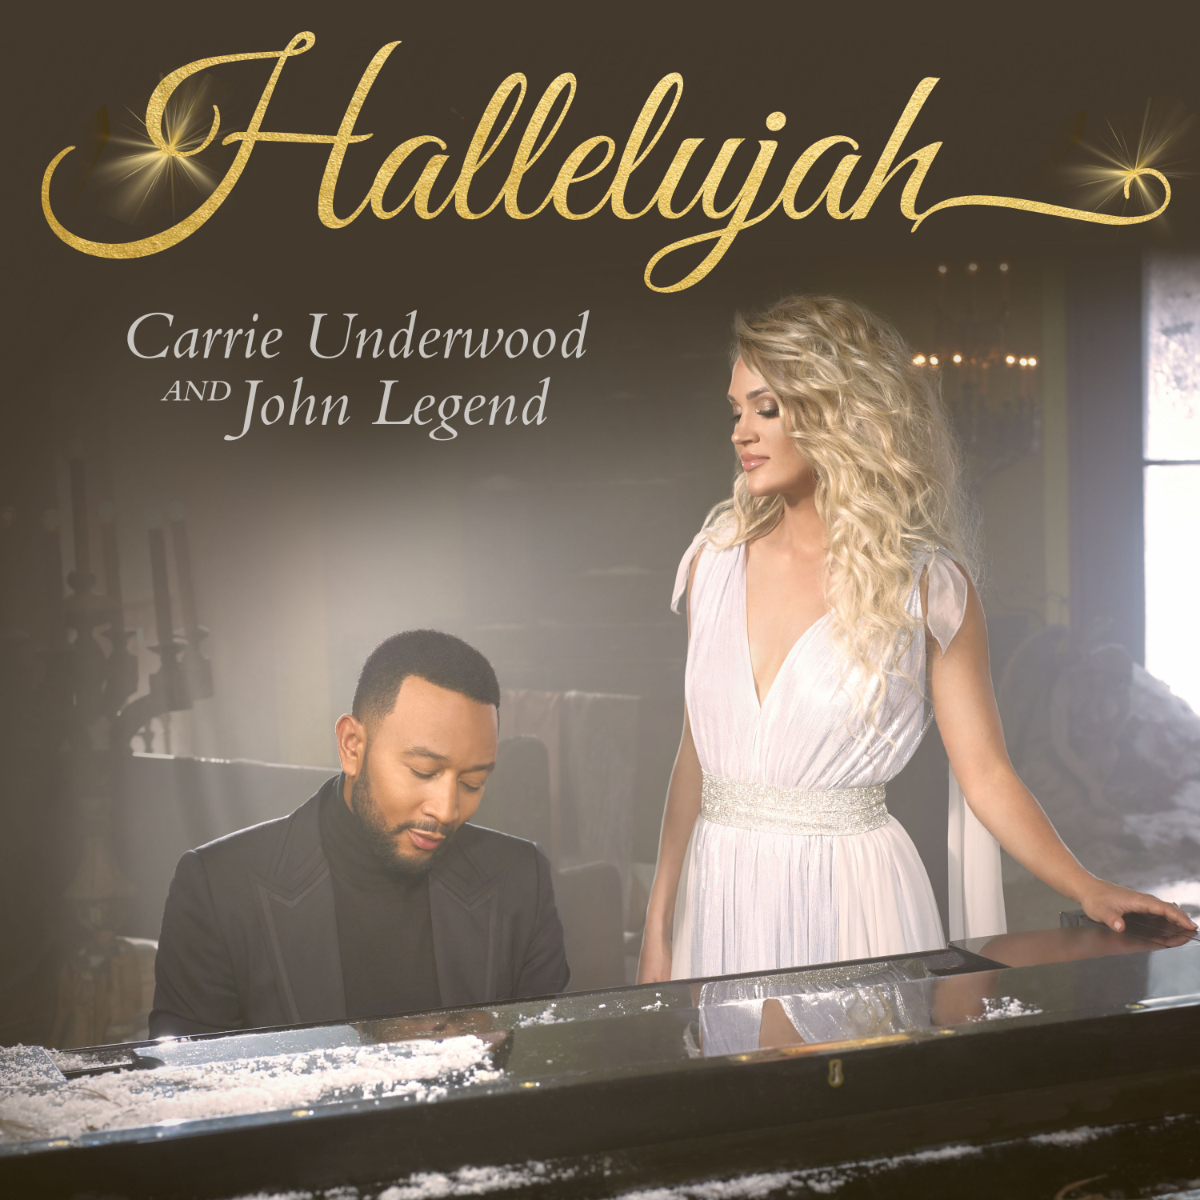 Hallelujah for John Legend and Carrie Underwood